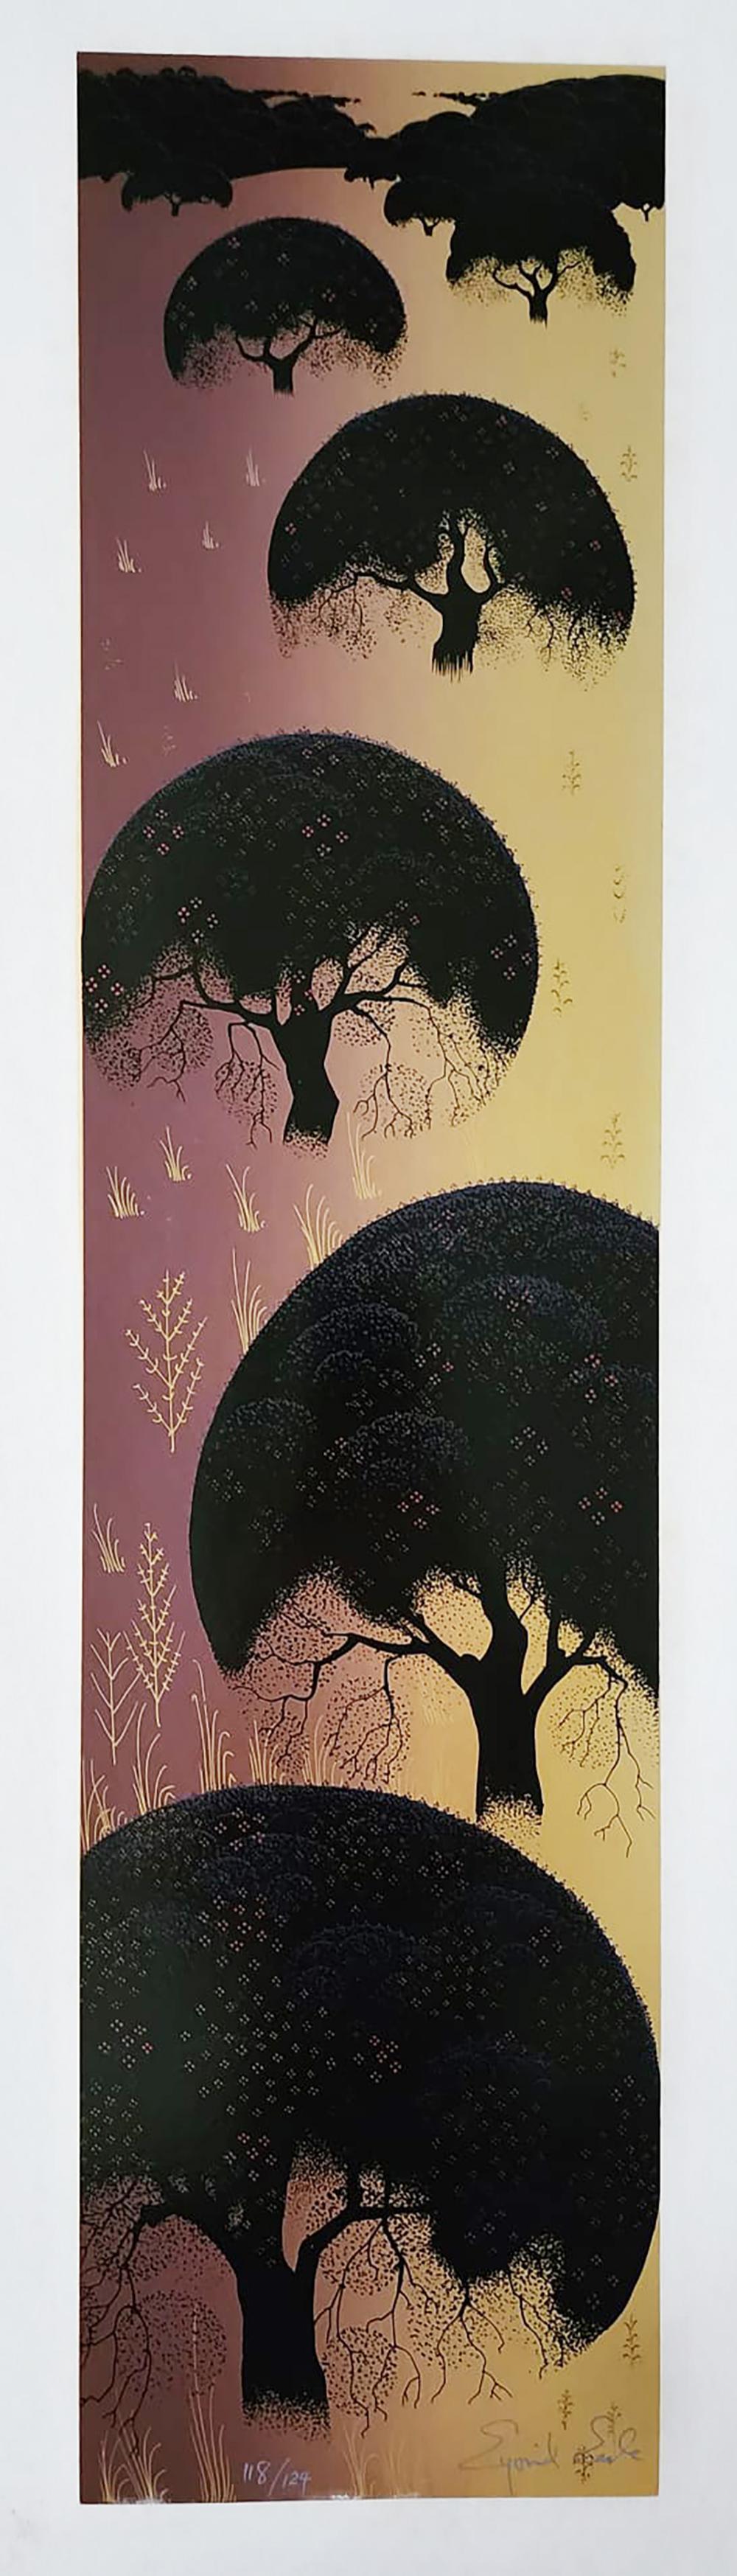 Eyvind Earle Landscape Print - 'SANTA YNEZ' 1974